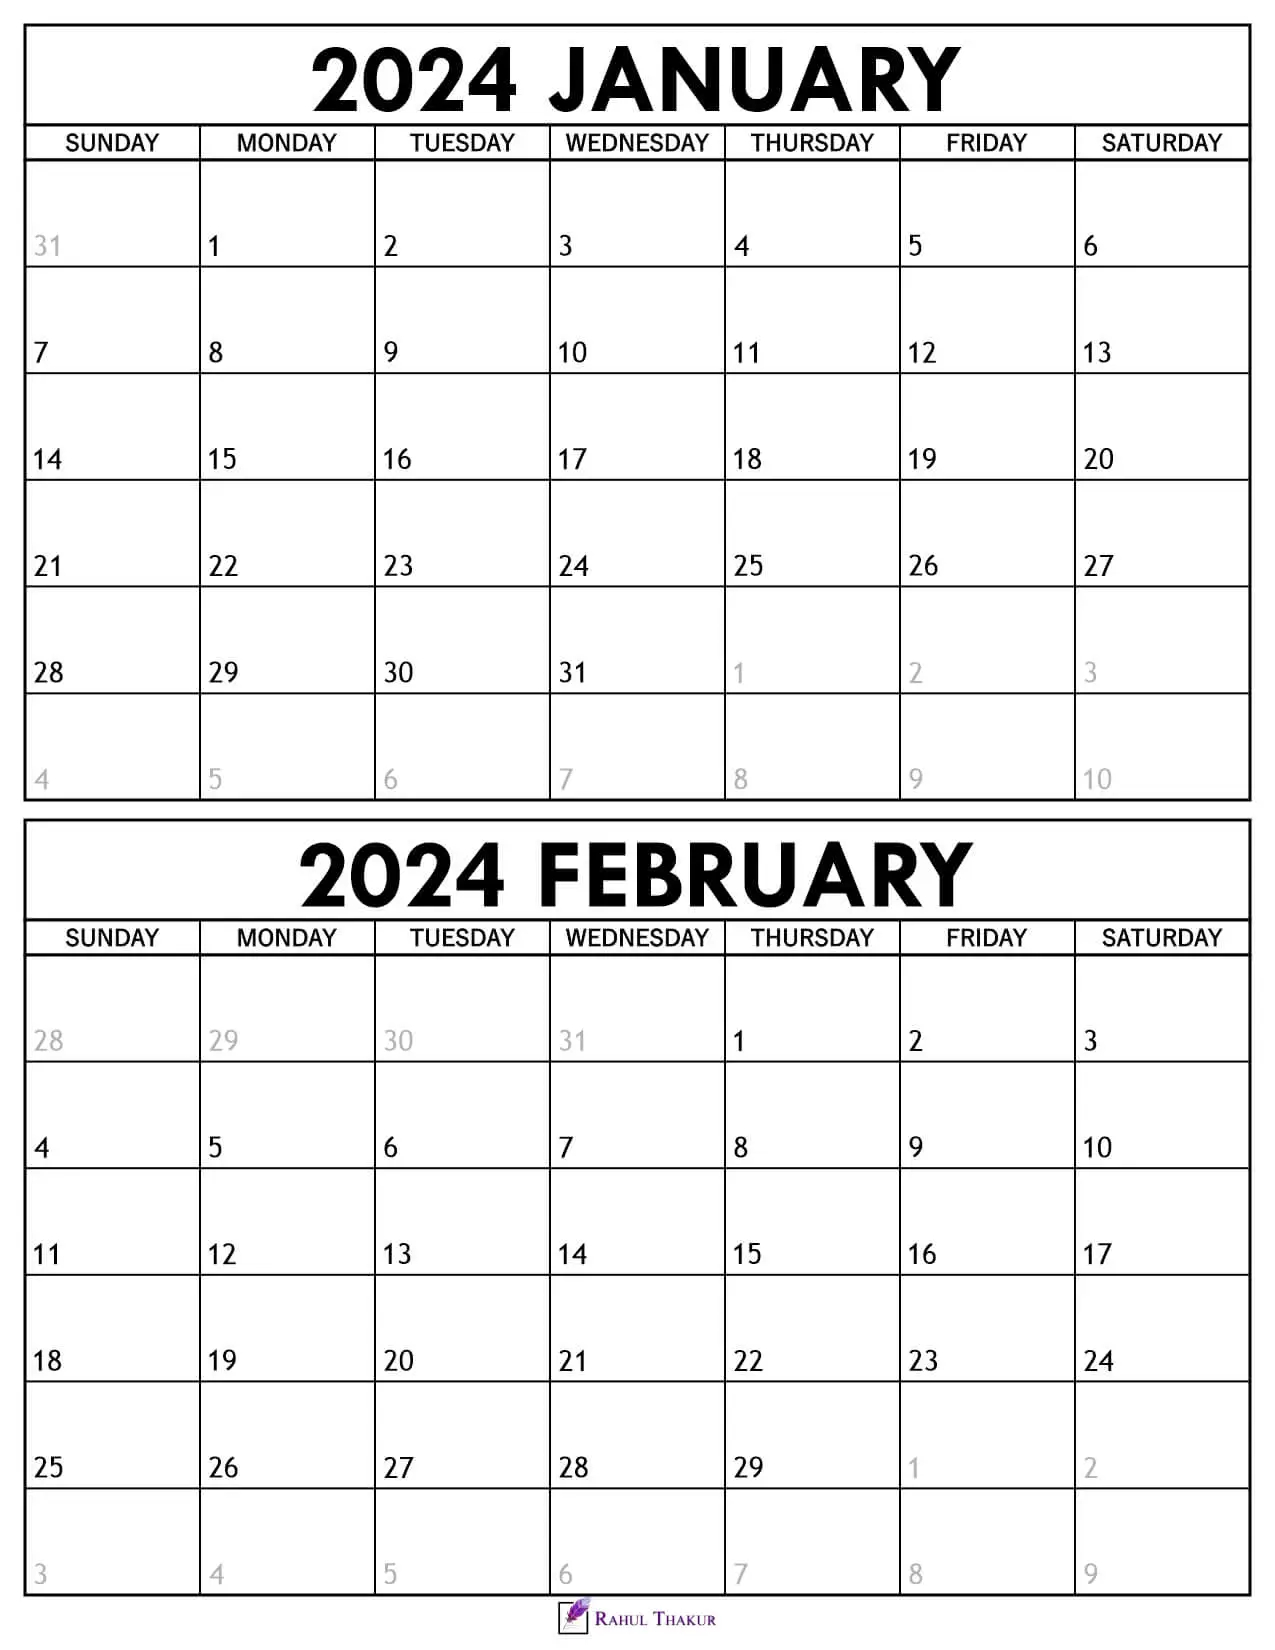 Printable January February 2024 Calendar Template - Thakur Writes for January February 2024 Printable Calendar